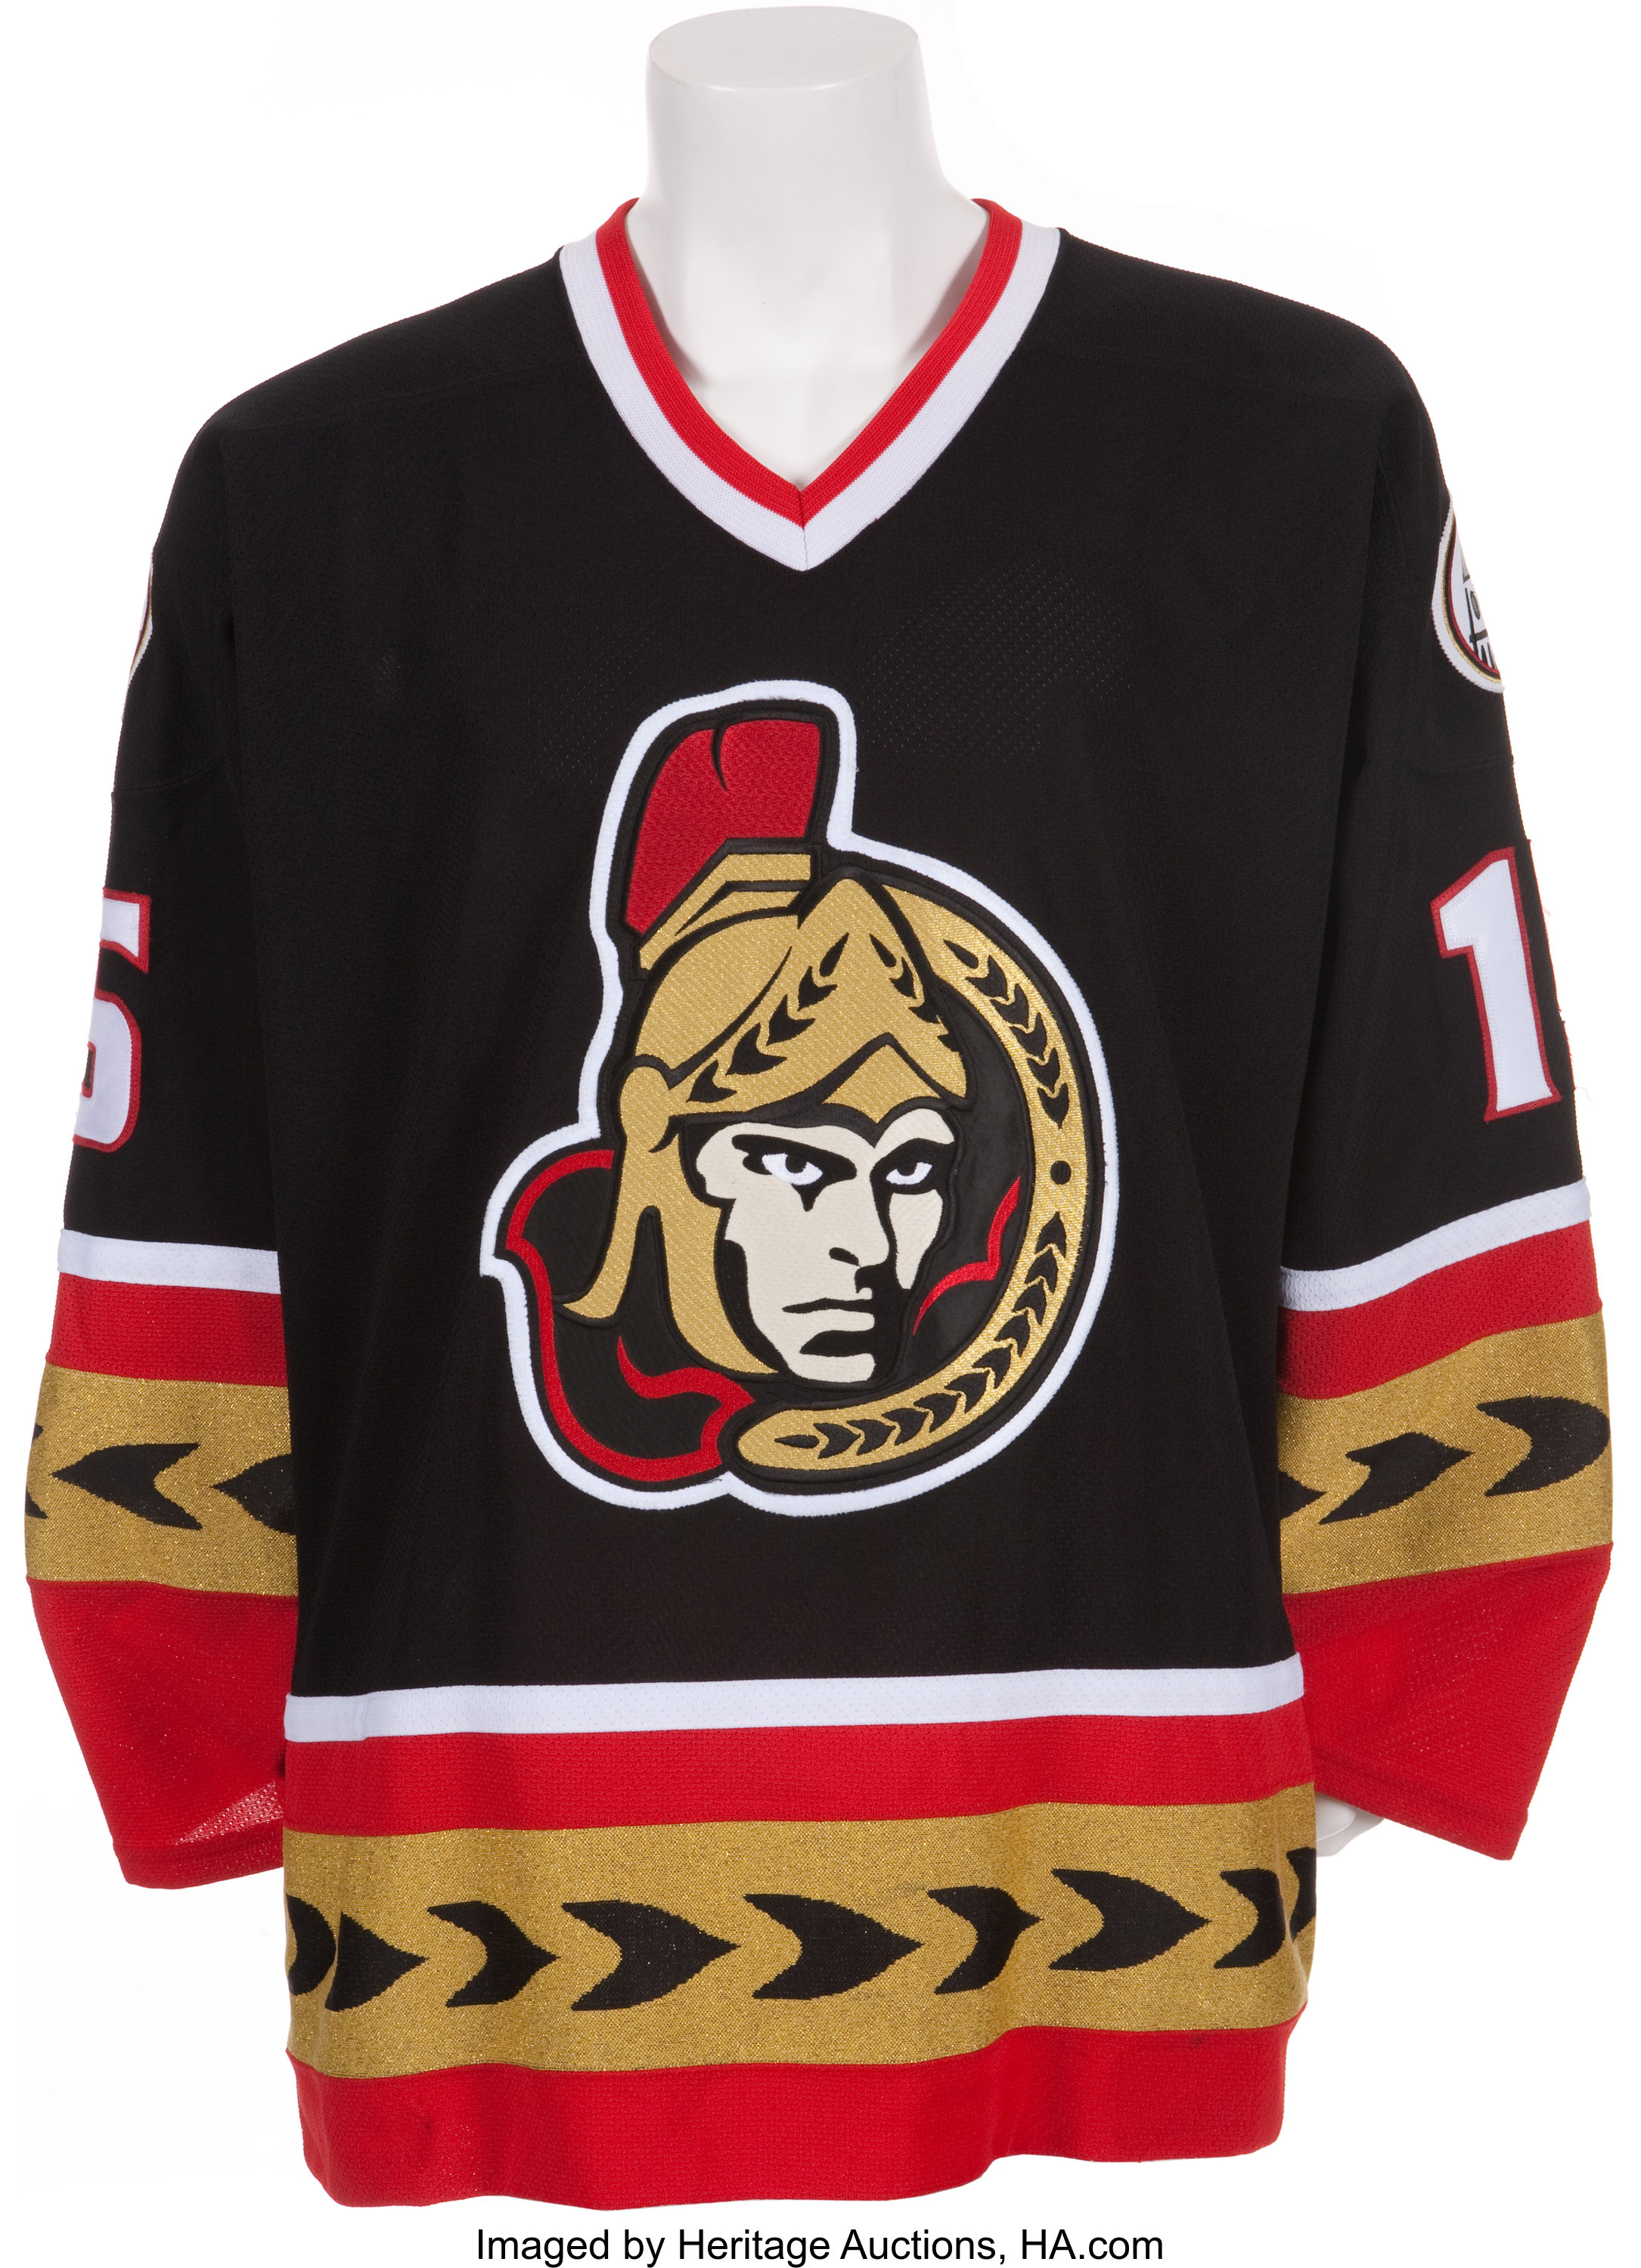 Ottawa Senators 2007-08 jersey artwork, This is a highly de…